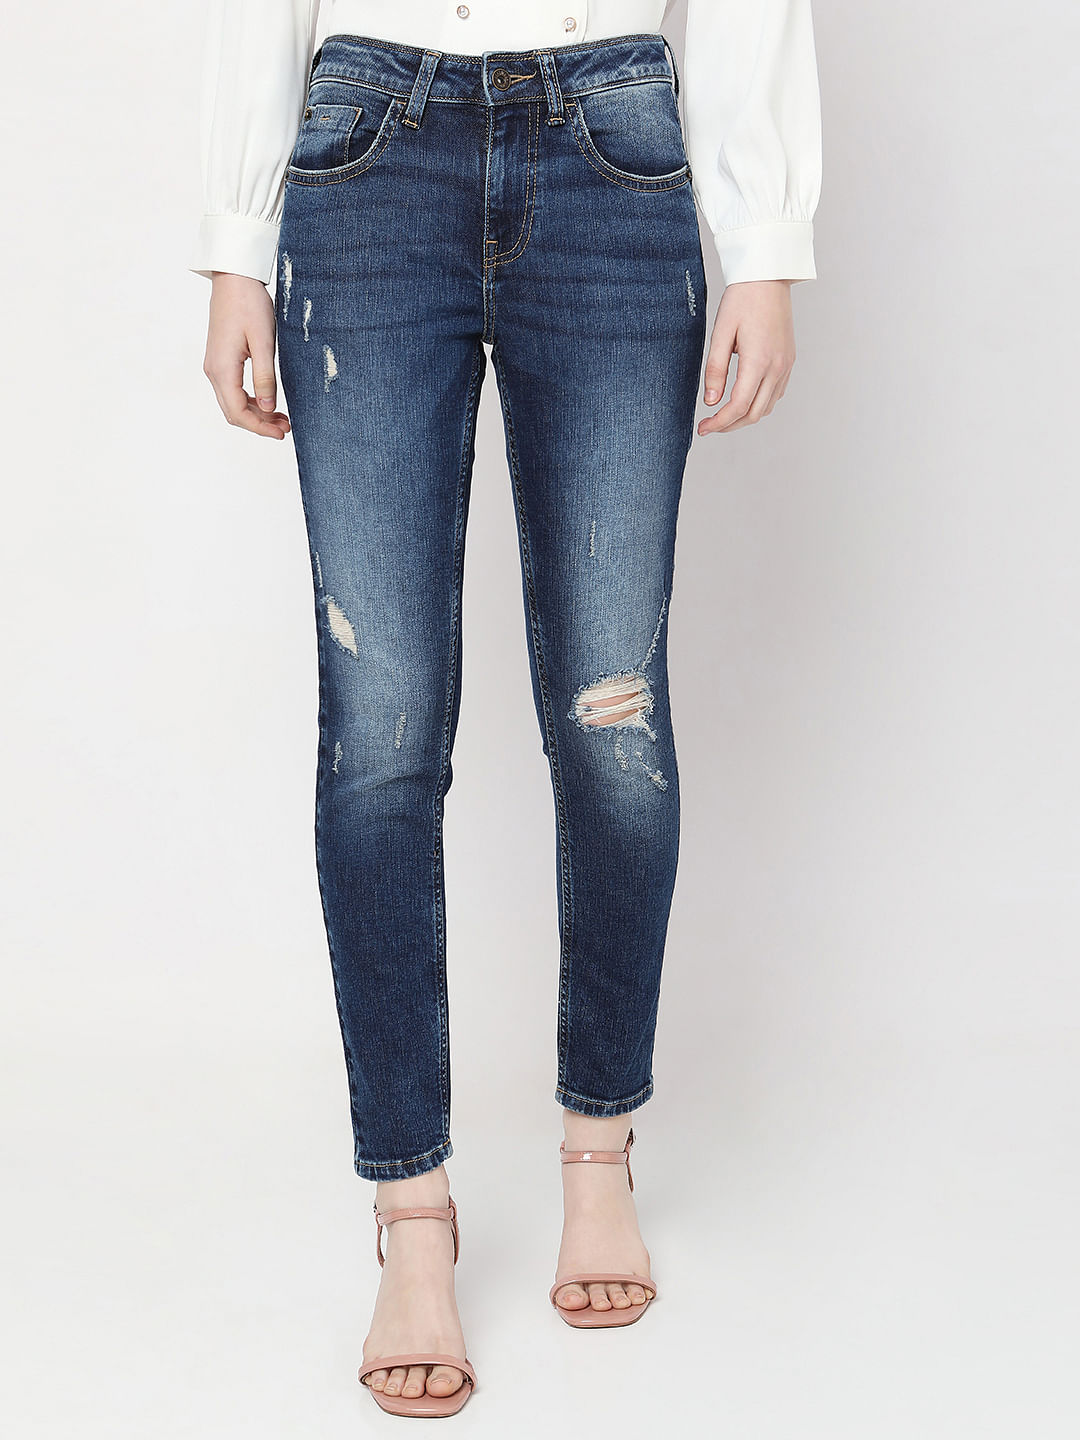 Buy Black Jeans  Jeggings for Women by LEE COOPER Online  Ajiocom